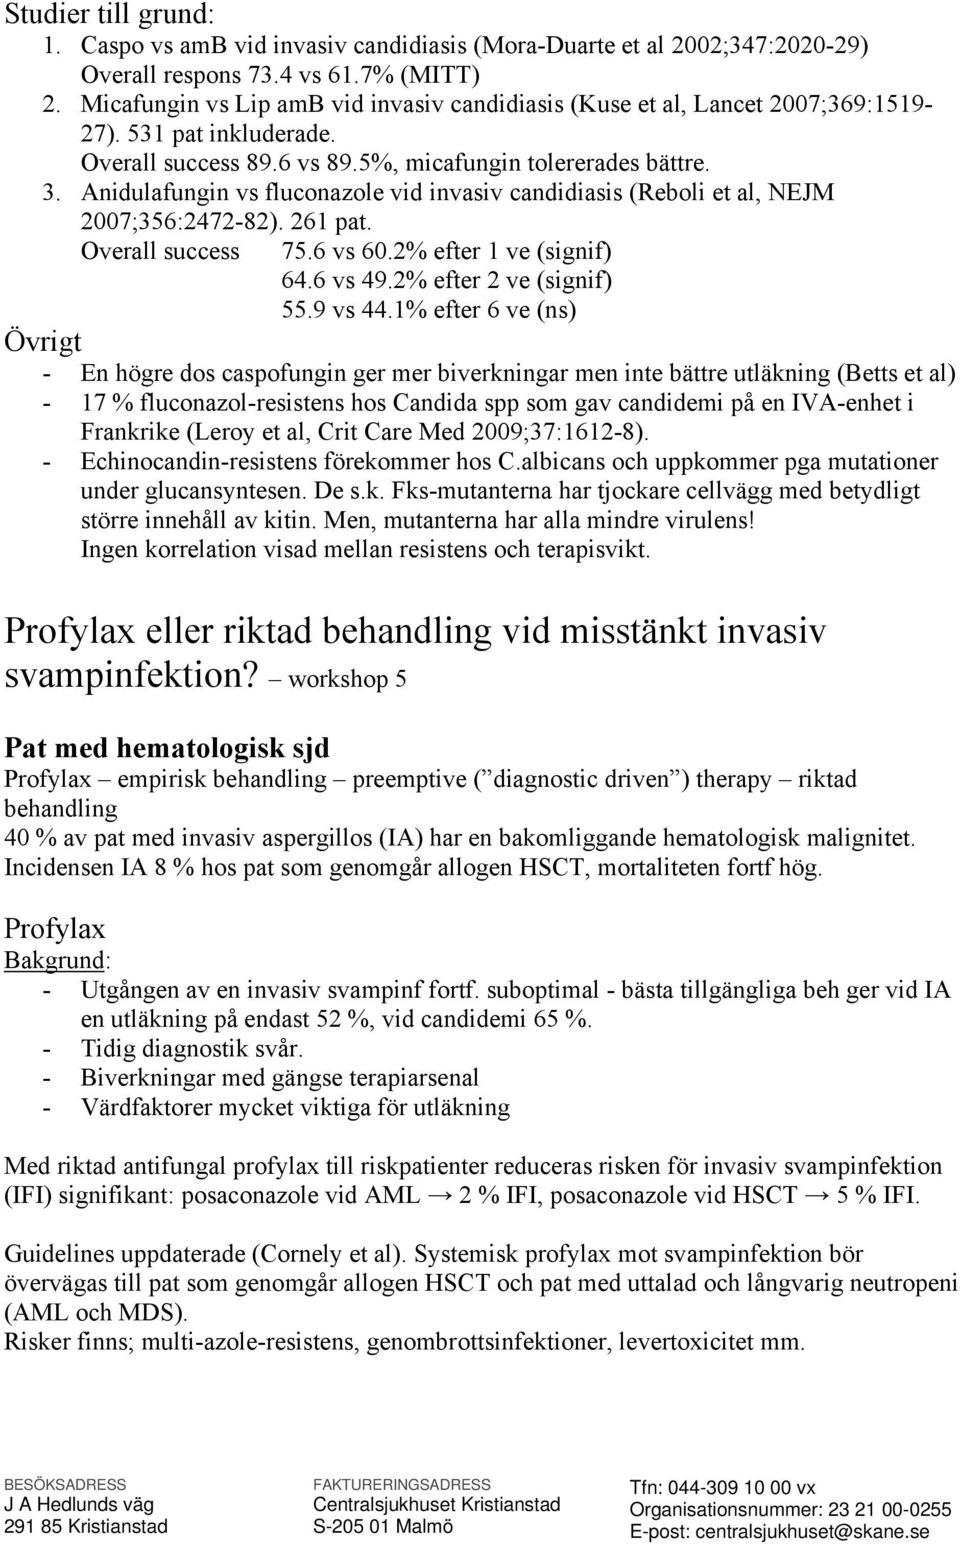 Anidulafungin vs fluconazole vid invasiv candidiasis (Reboli et al, NEJM 2007;356:2472-82). 261 pat. Overall success 75.6 vs 60.2% efter 1 ve (signif) 64.6 vs 49.2% efter 2 ve (signif) 55.9 vs 44.